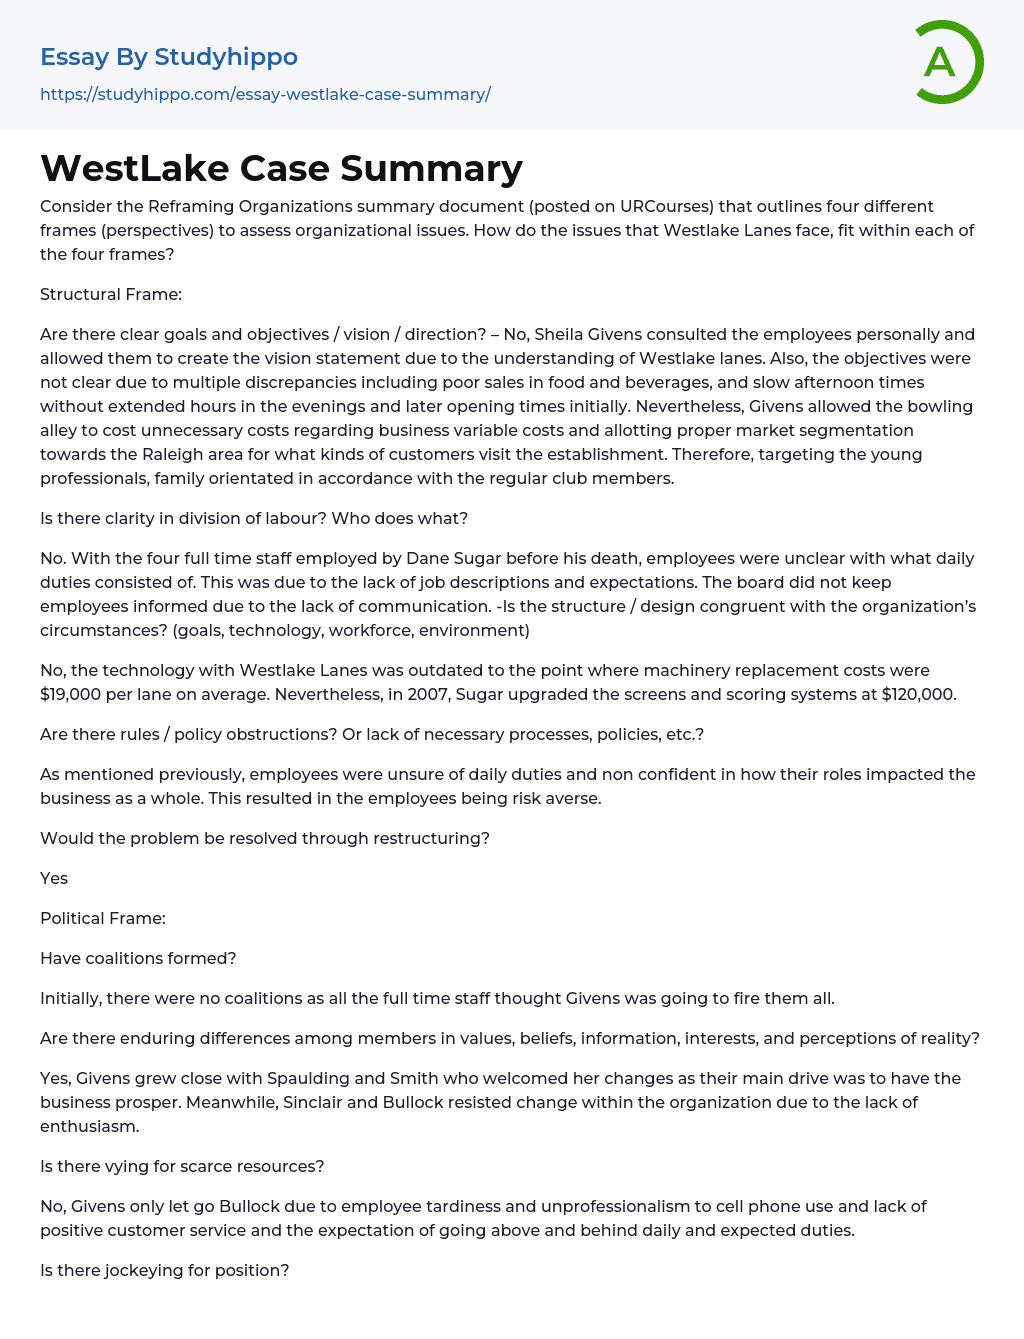 WestLake Case Summary Essay Example